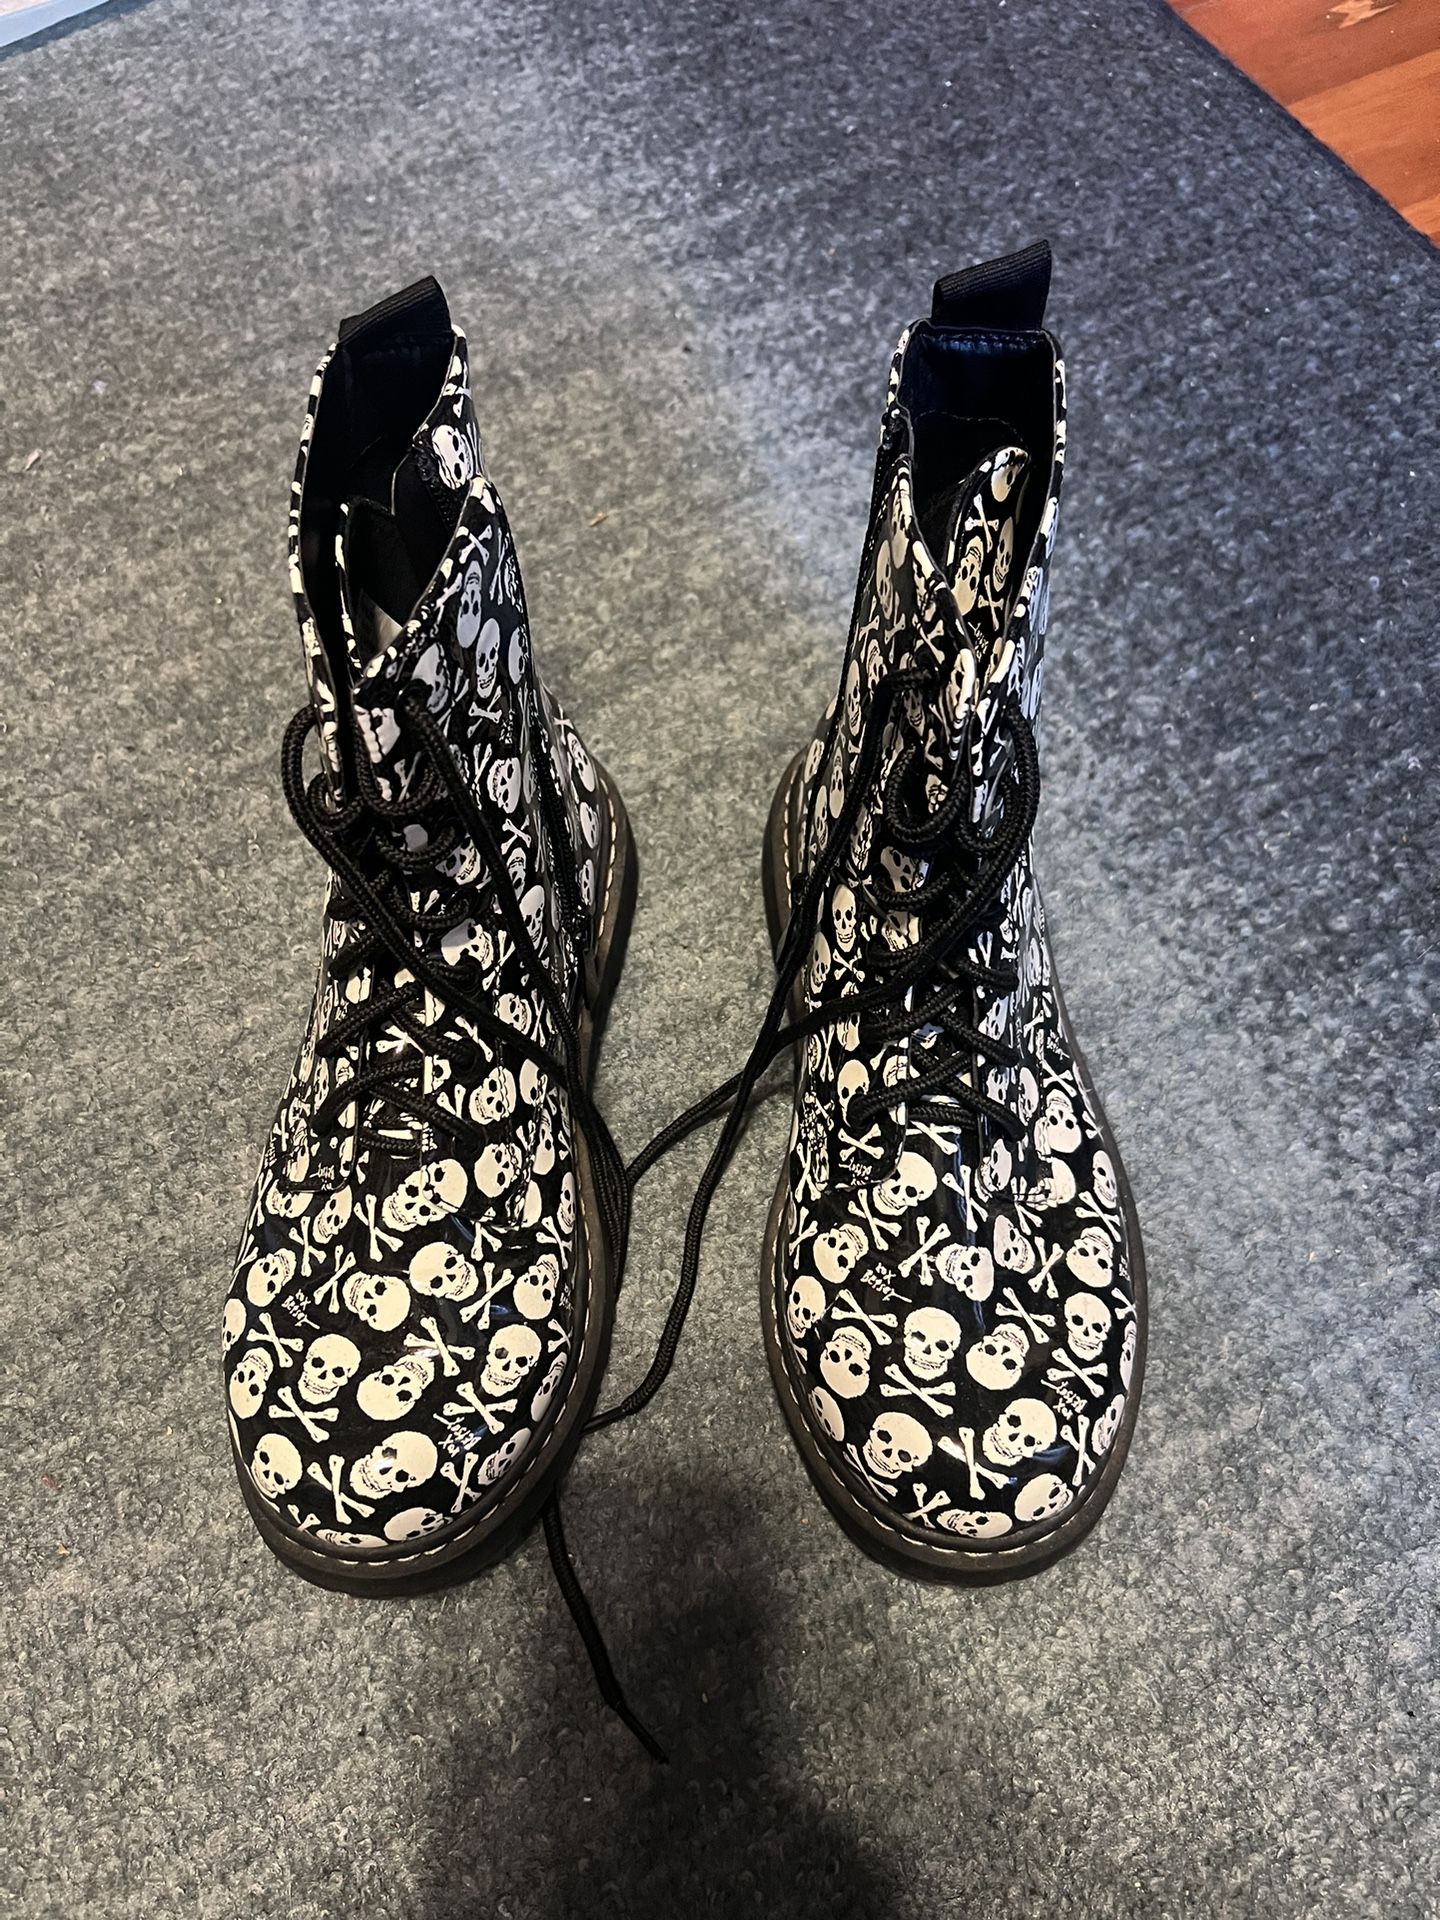 Betsey Johnson/ Torrid boots 